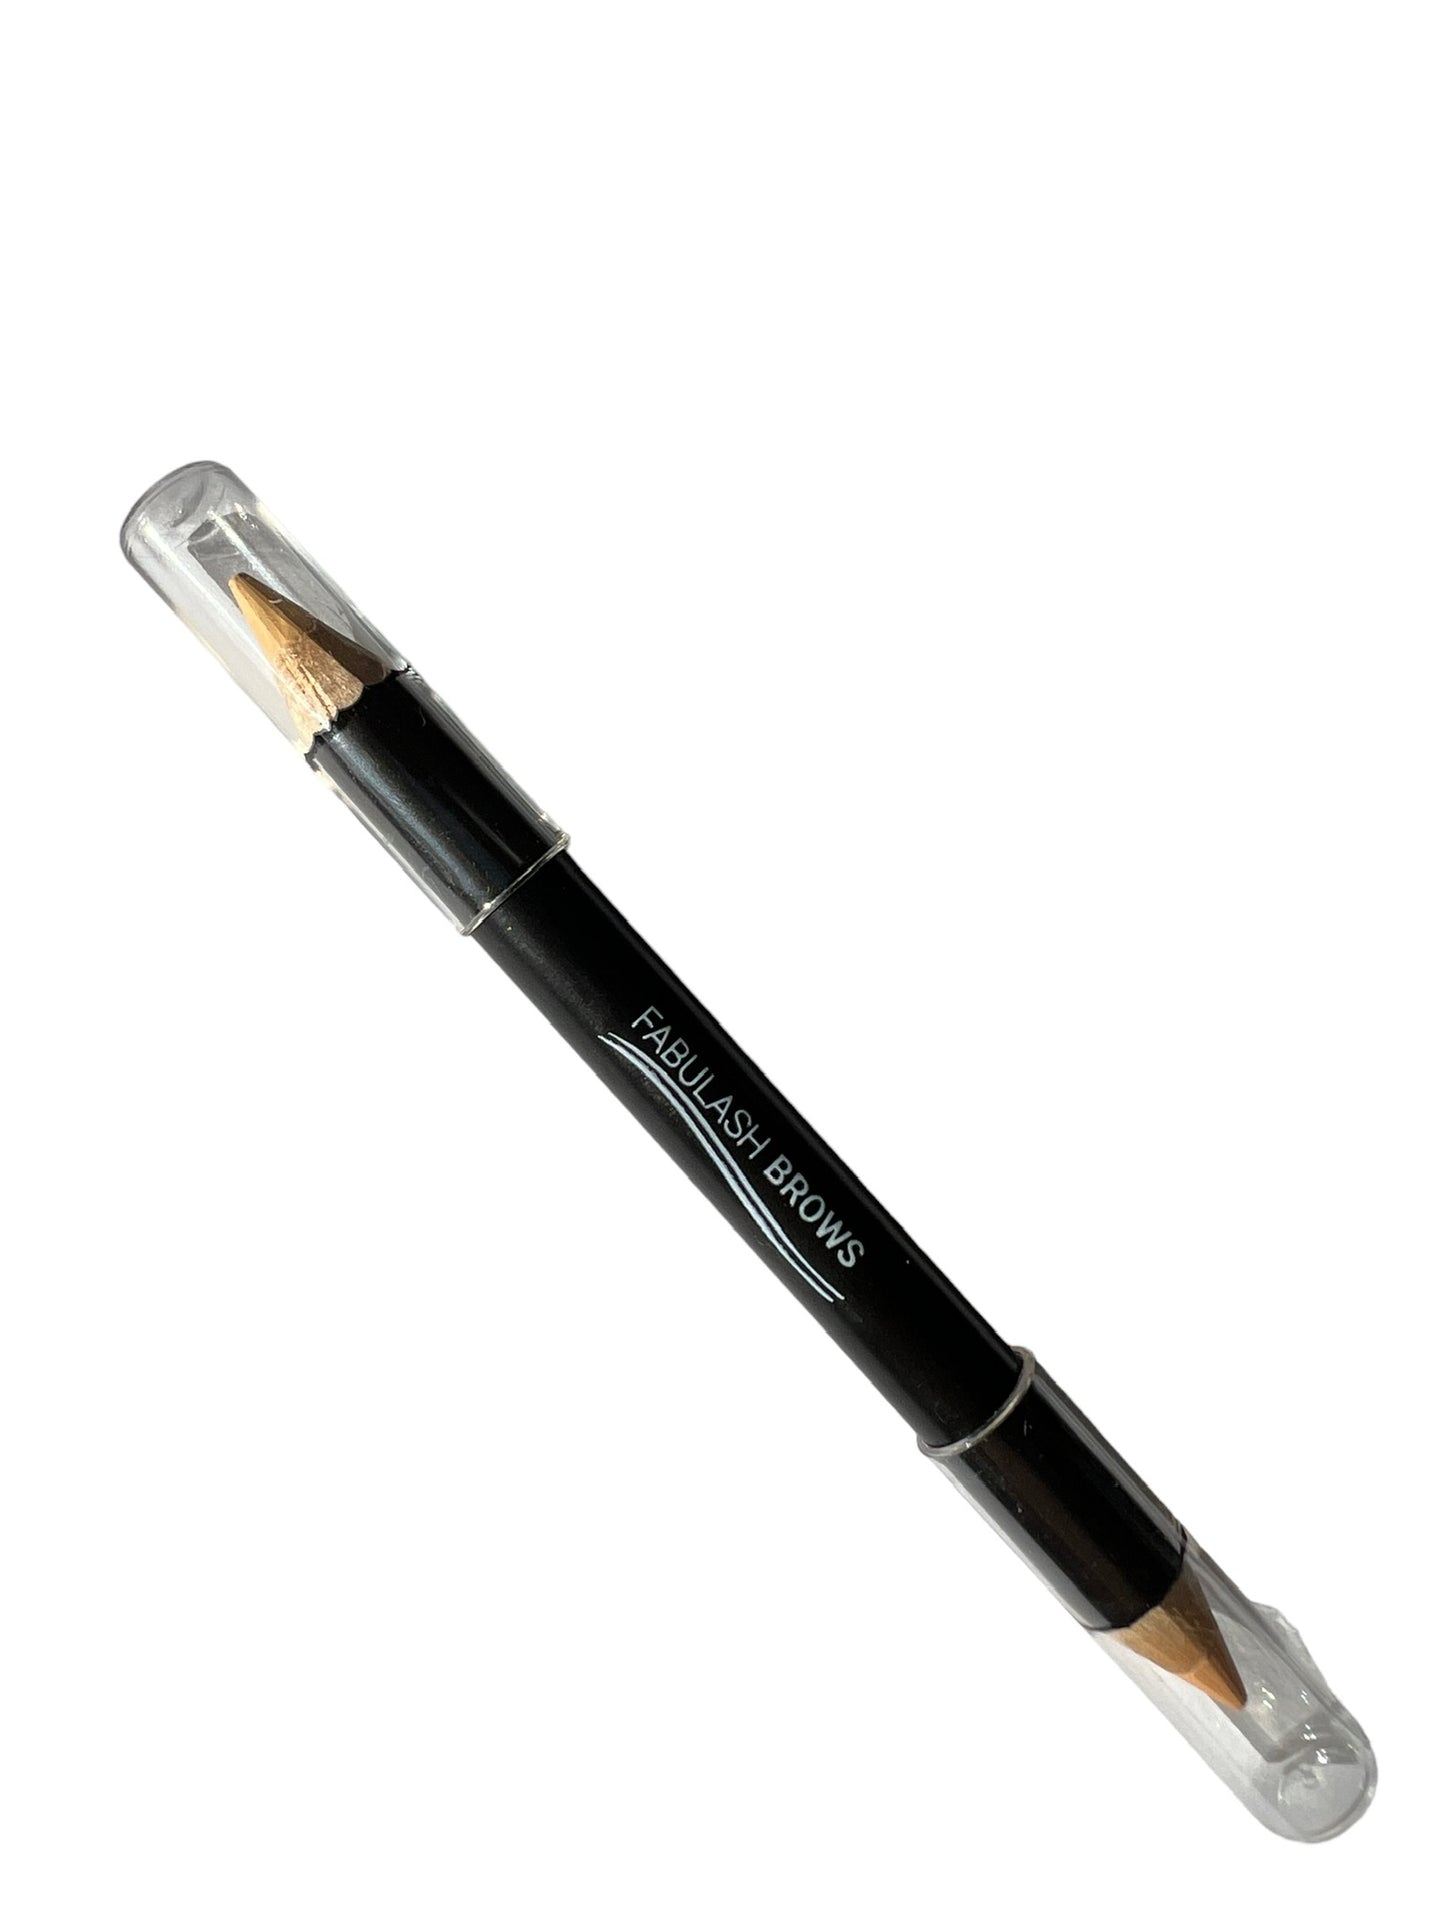 Dual highlighter pencil